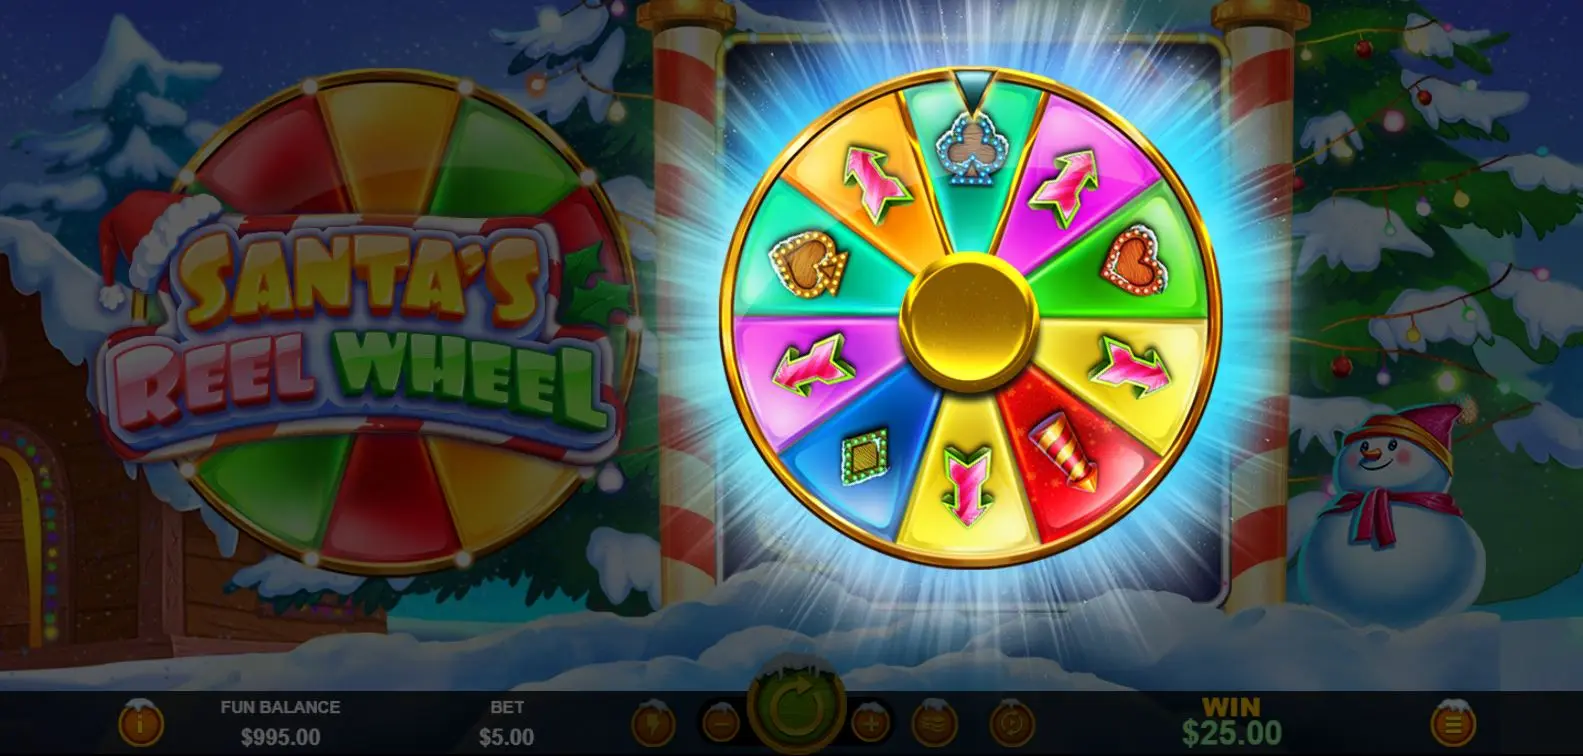 Santa's Reel Wheel Bonus Wheel special feature